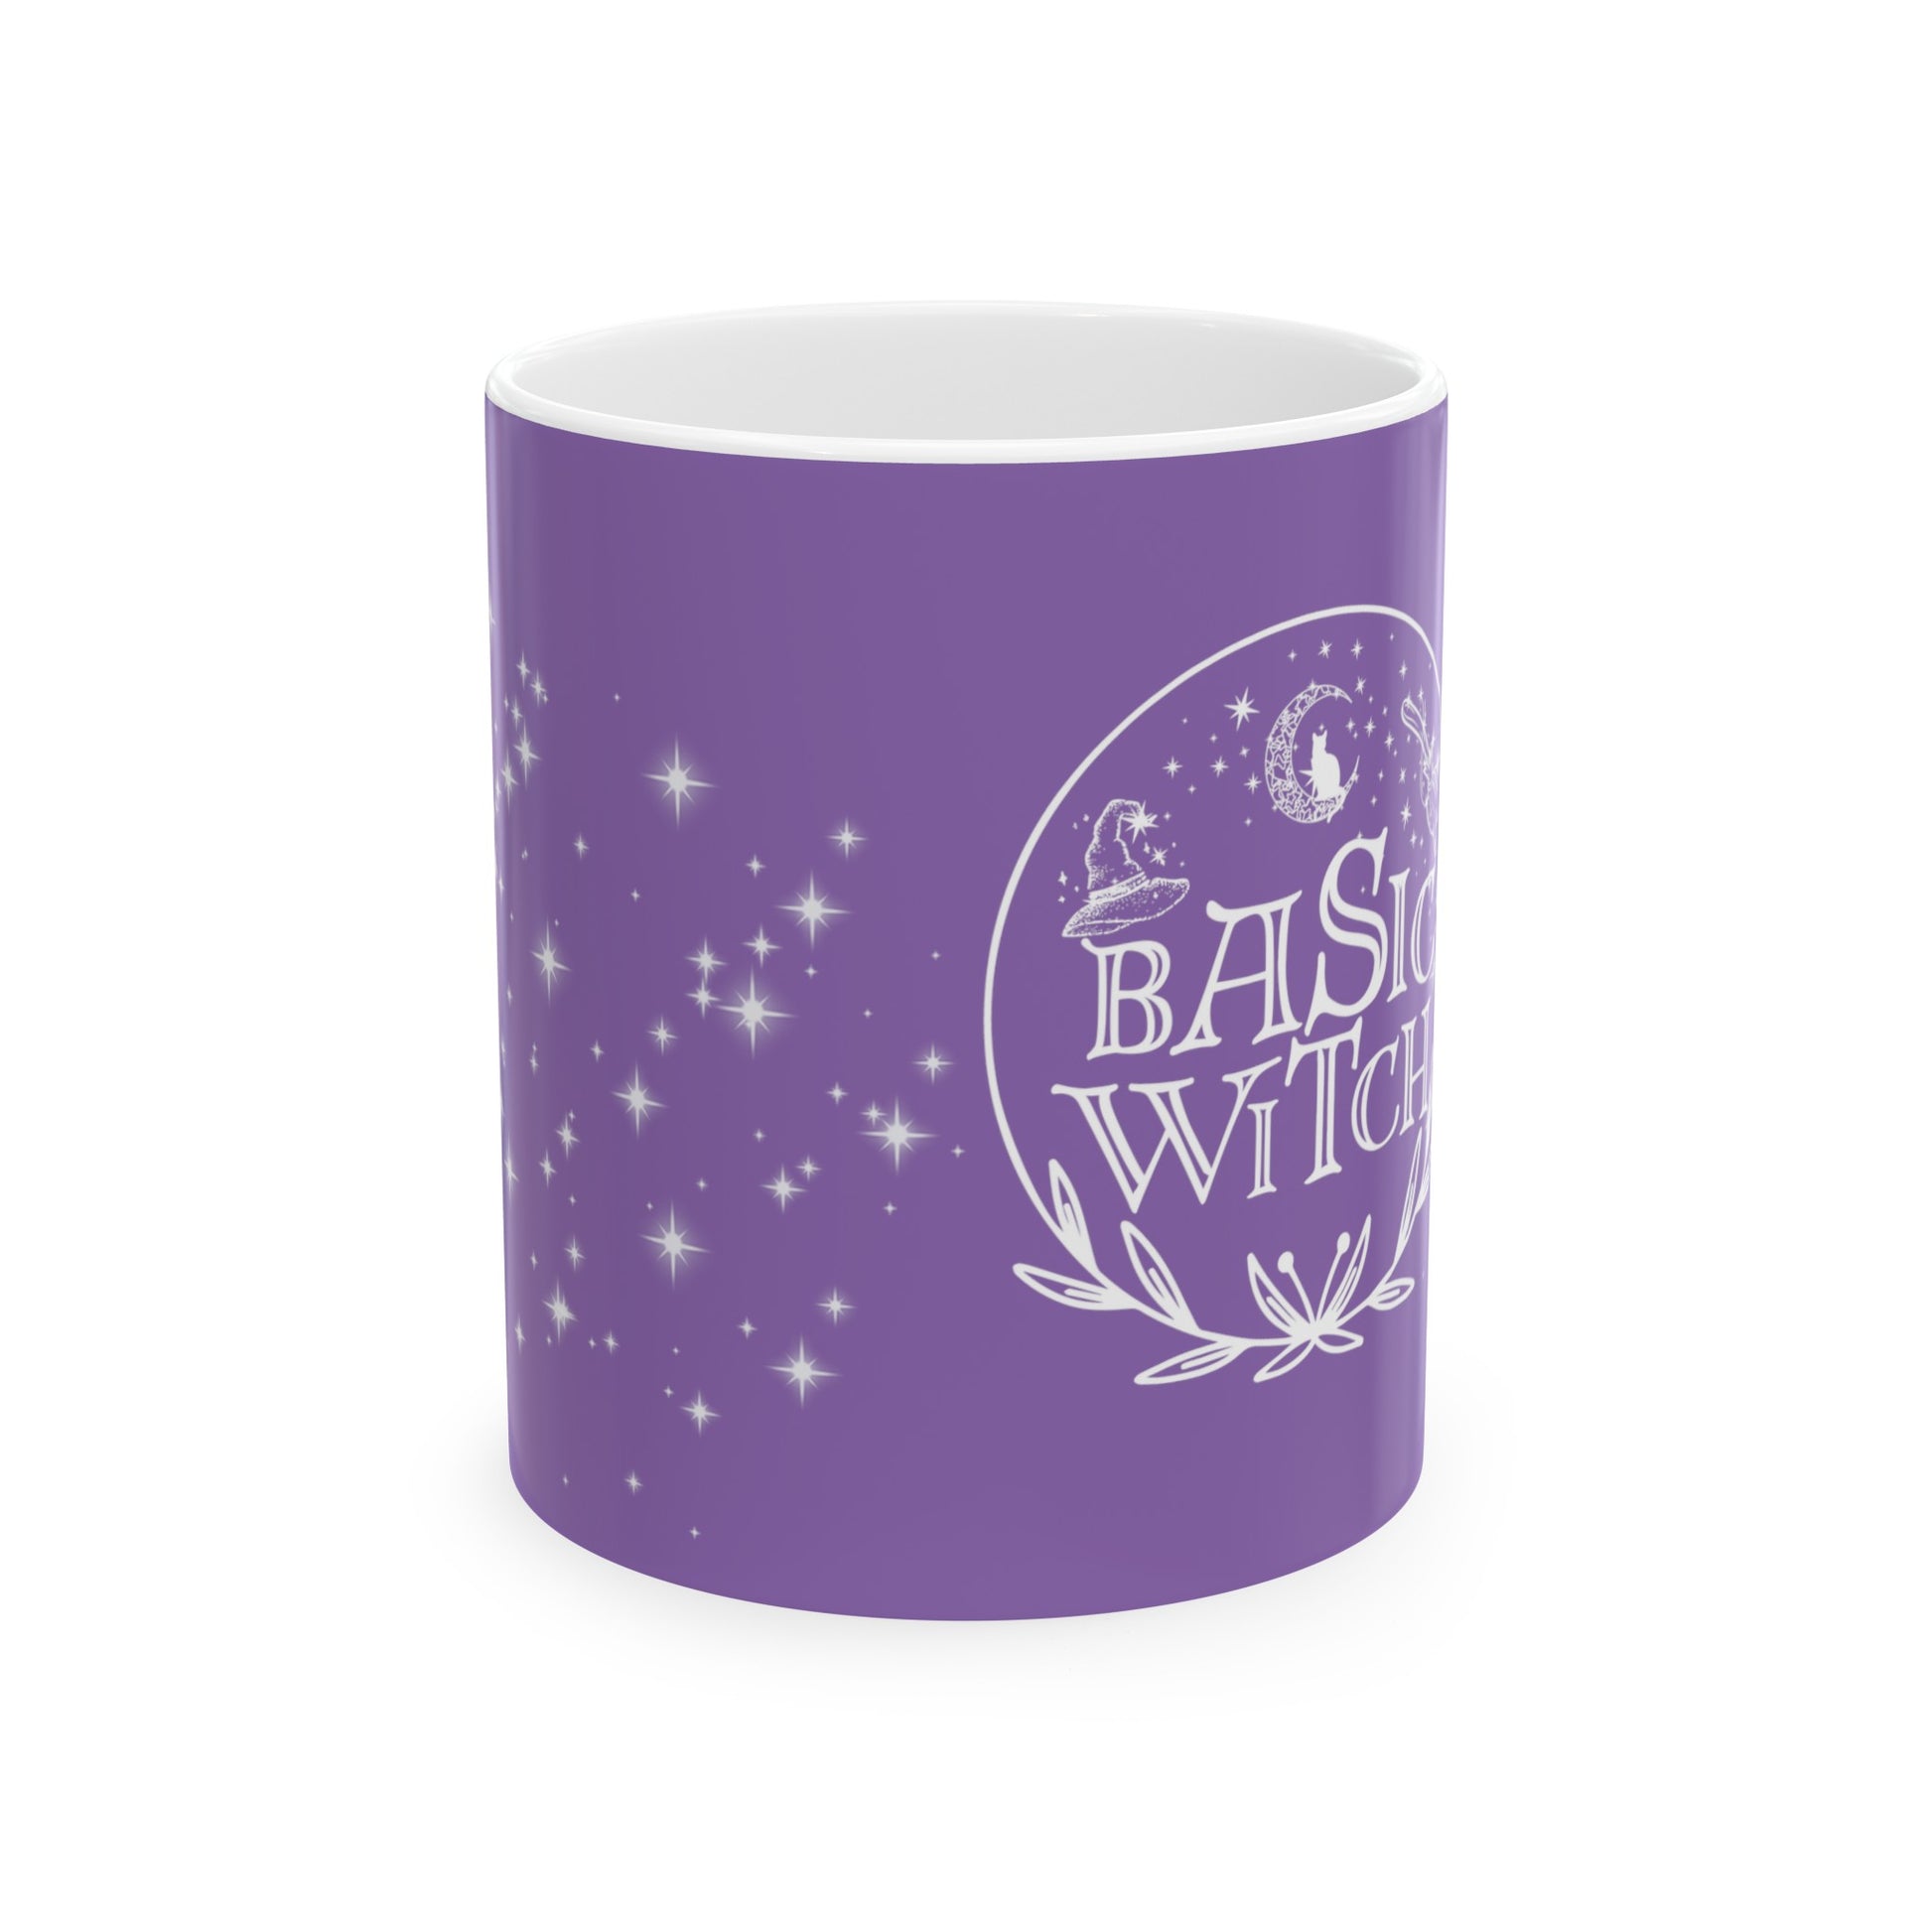 Basic Witch Ceramic Mug - The Witchy Gypsy